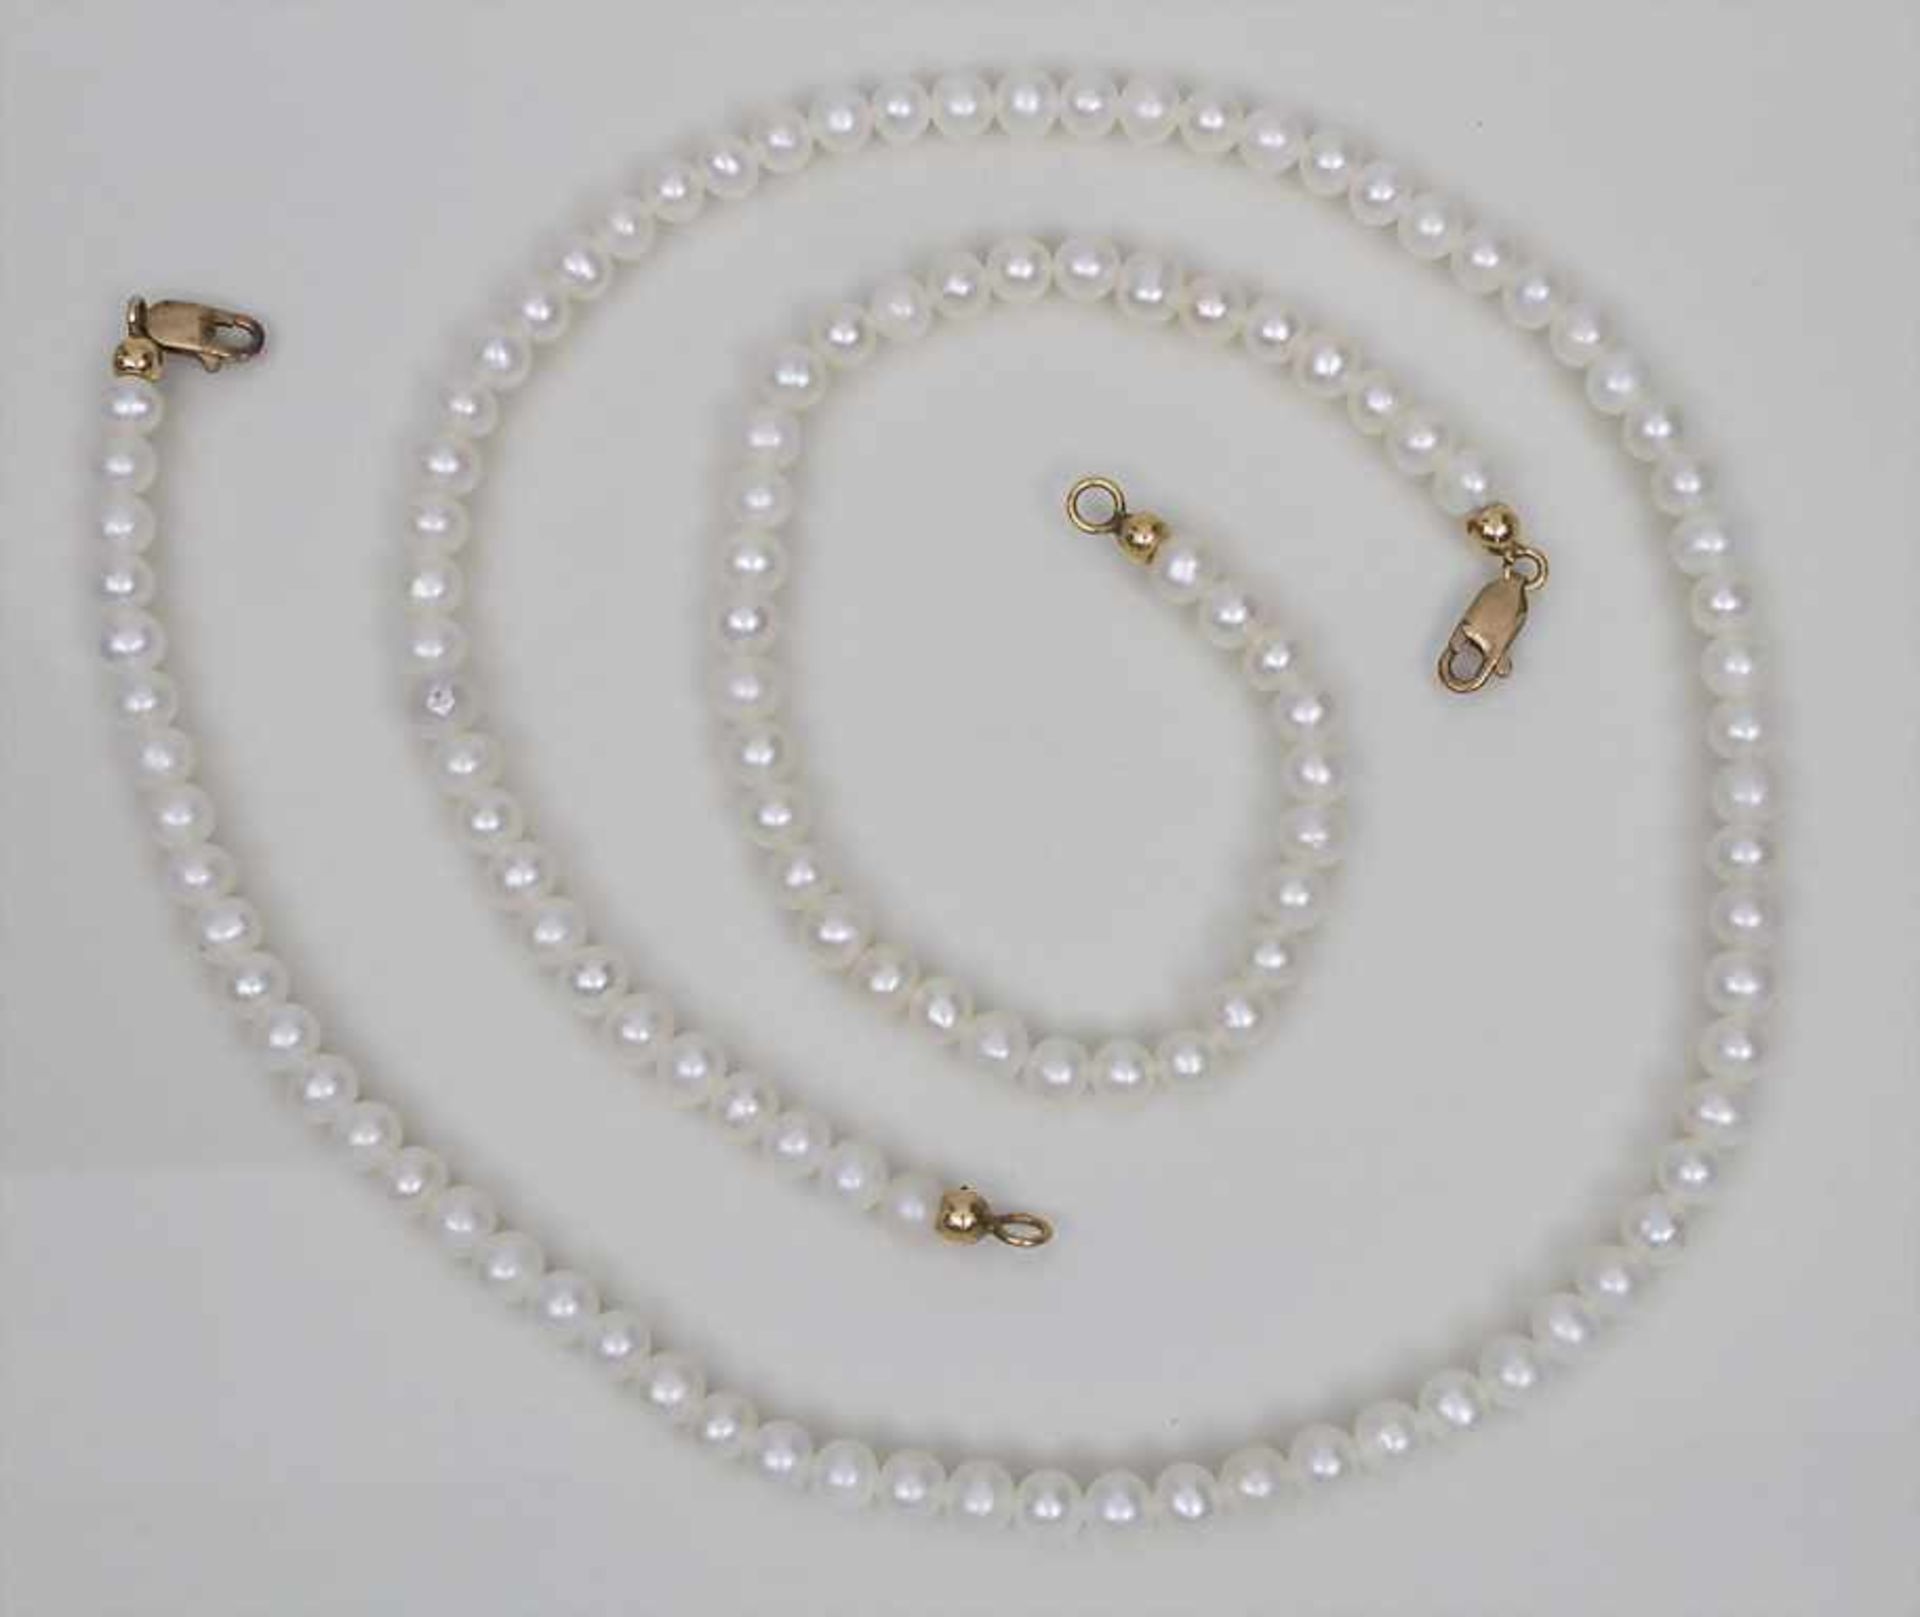 Perlencollier mit Armband / Collier and Bracelet of Pearls Material: Süßwasserperlen, Goldschließe